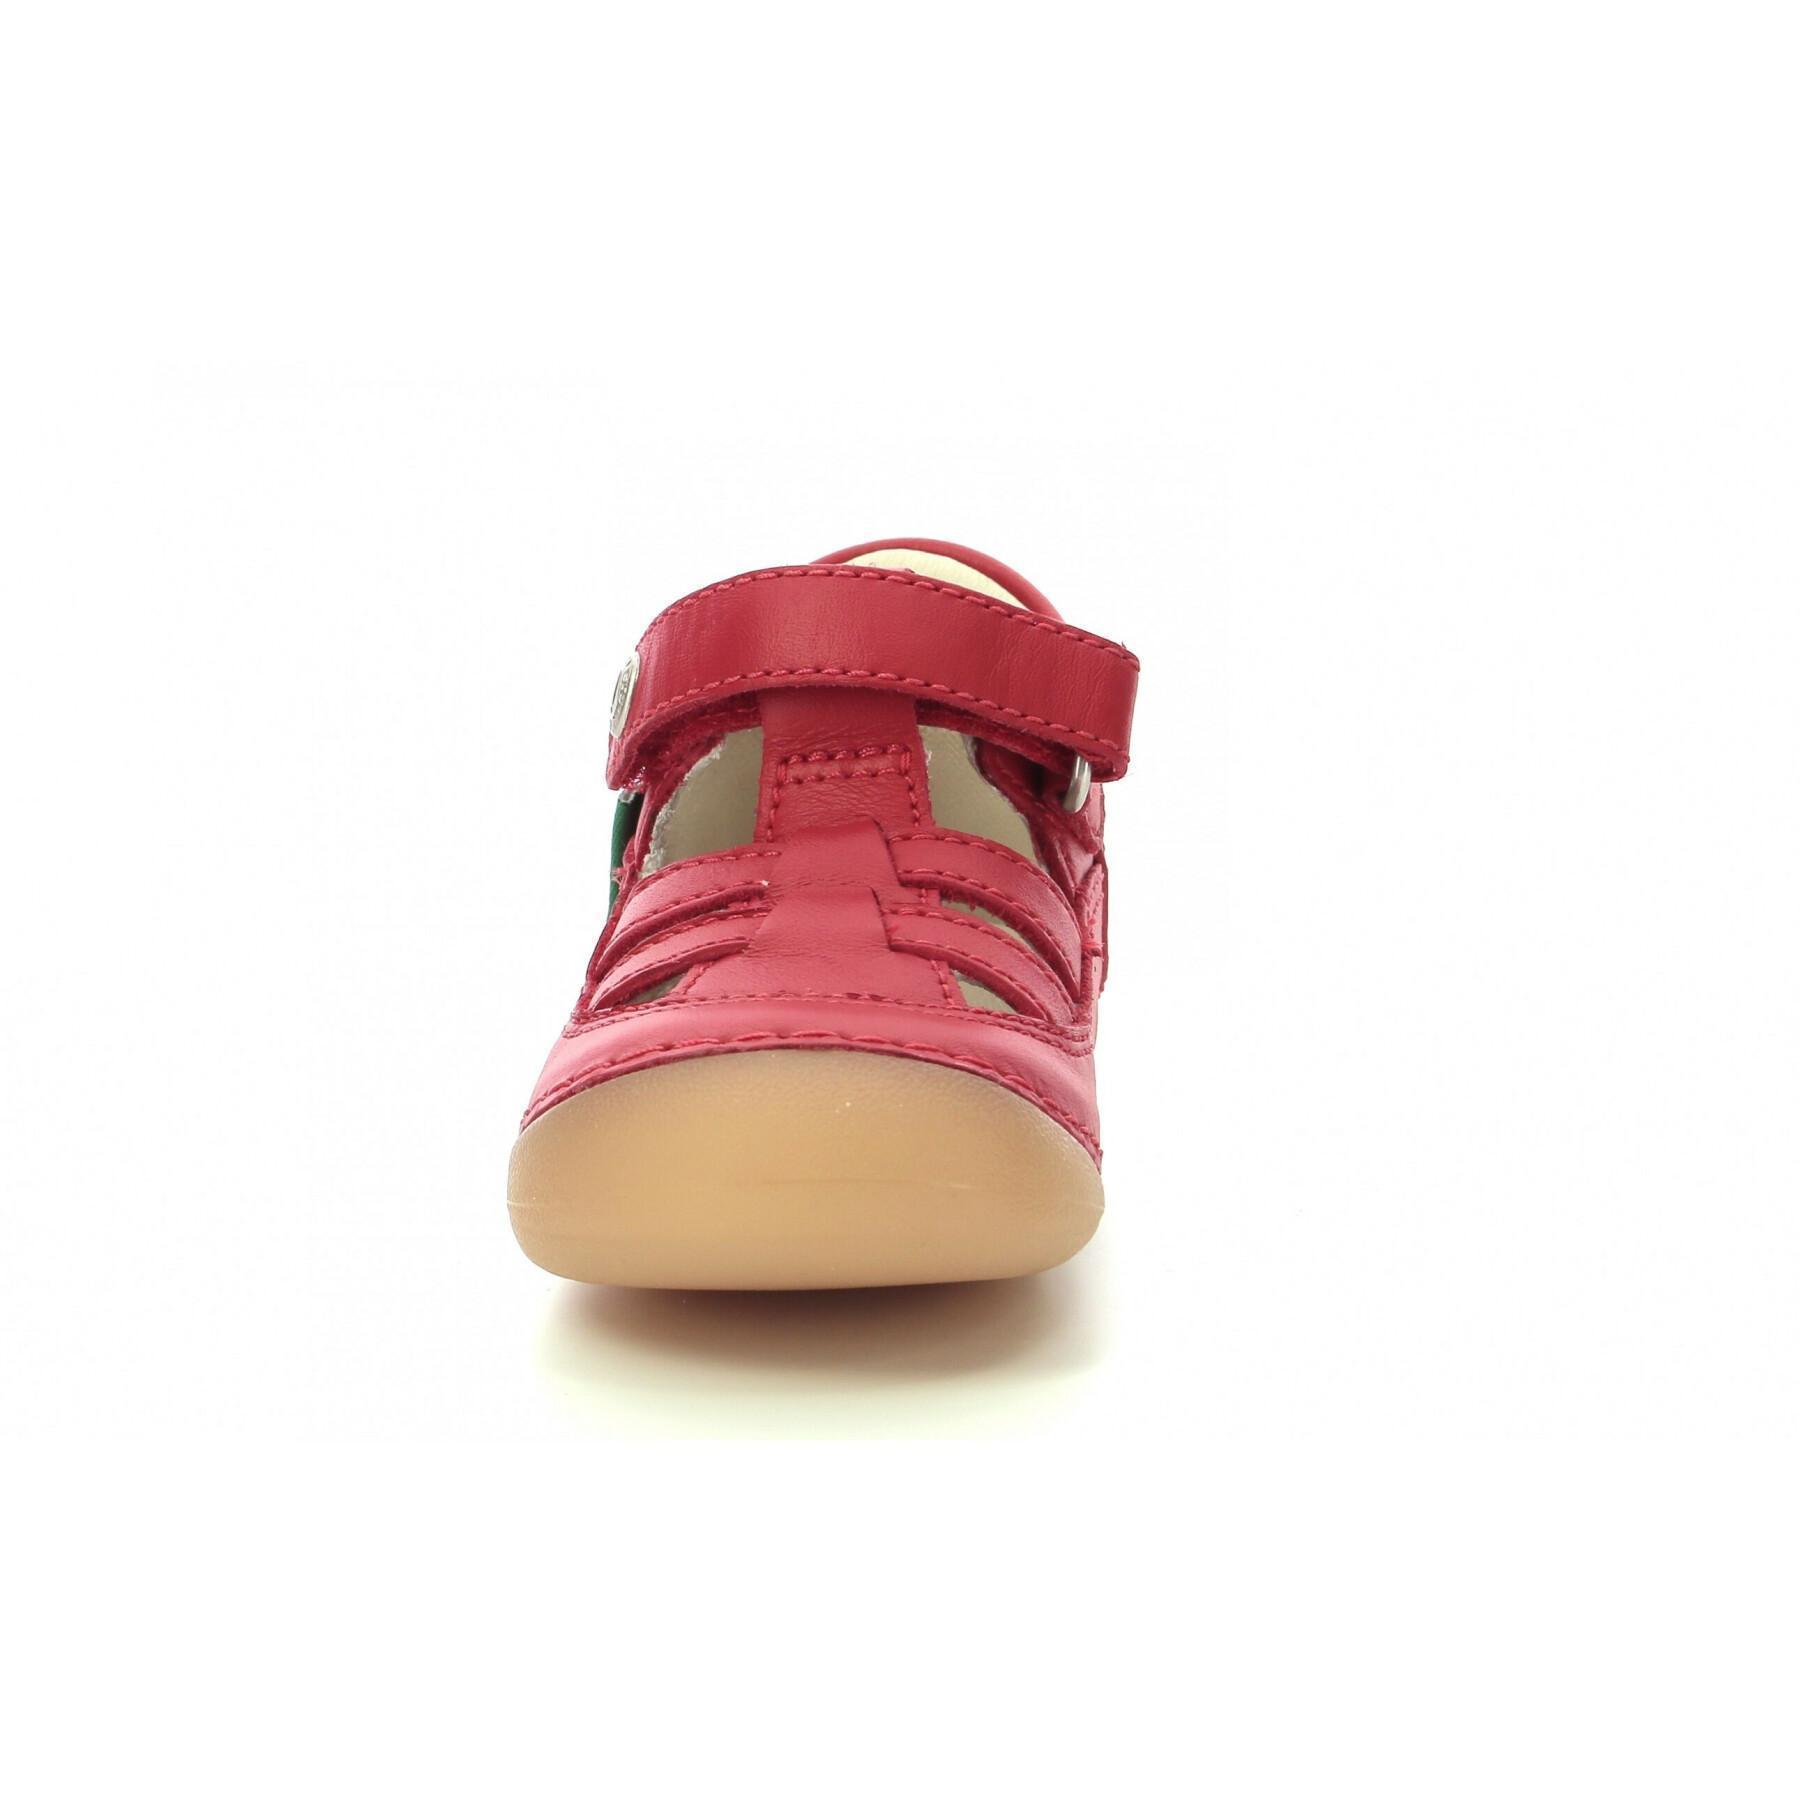 Baby sandals Kickers Sushy